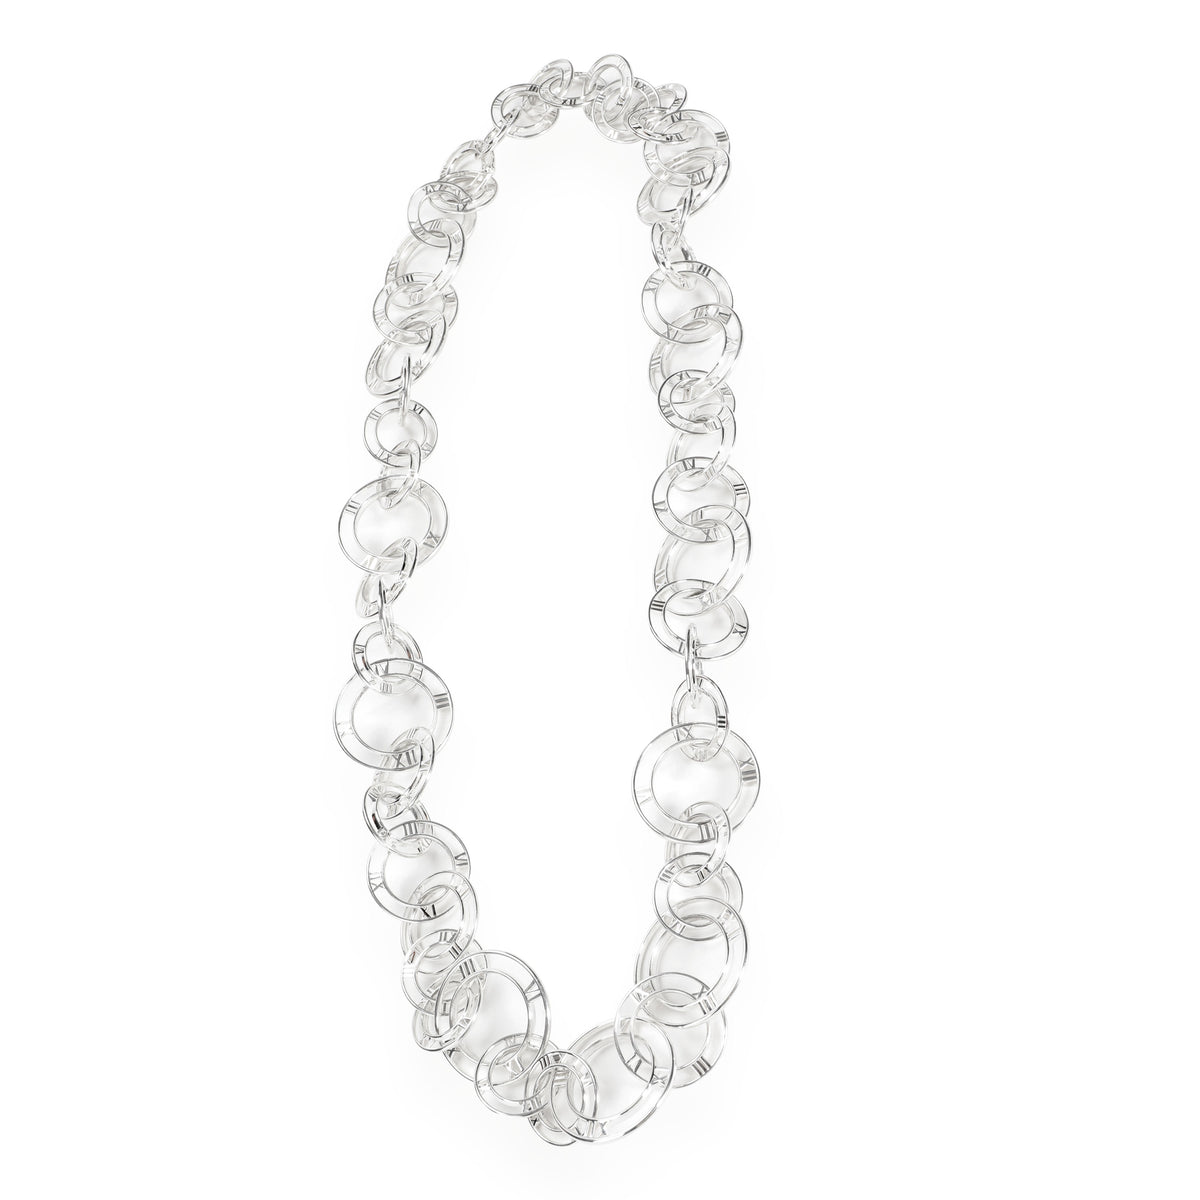 Tiffany & Co. Atlas Link Necklace in  Sterling Silver